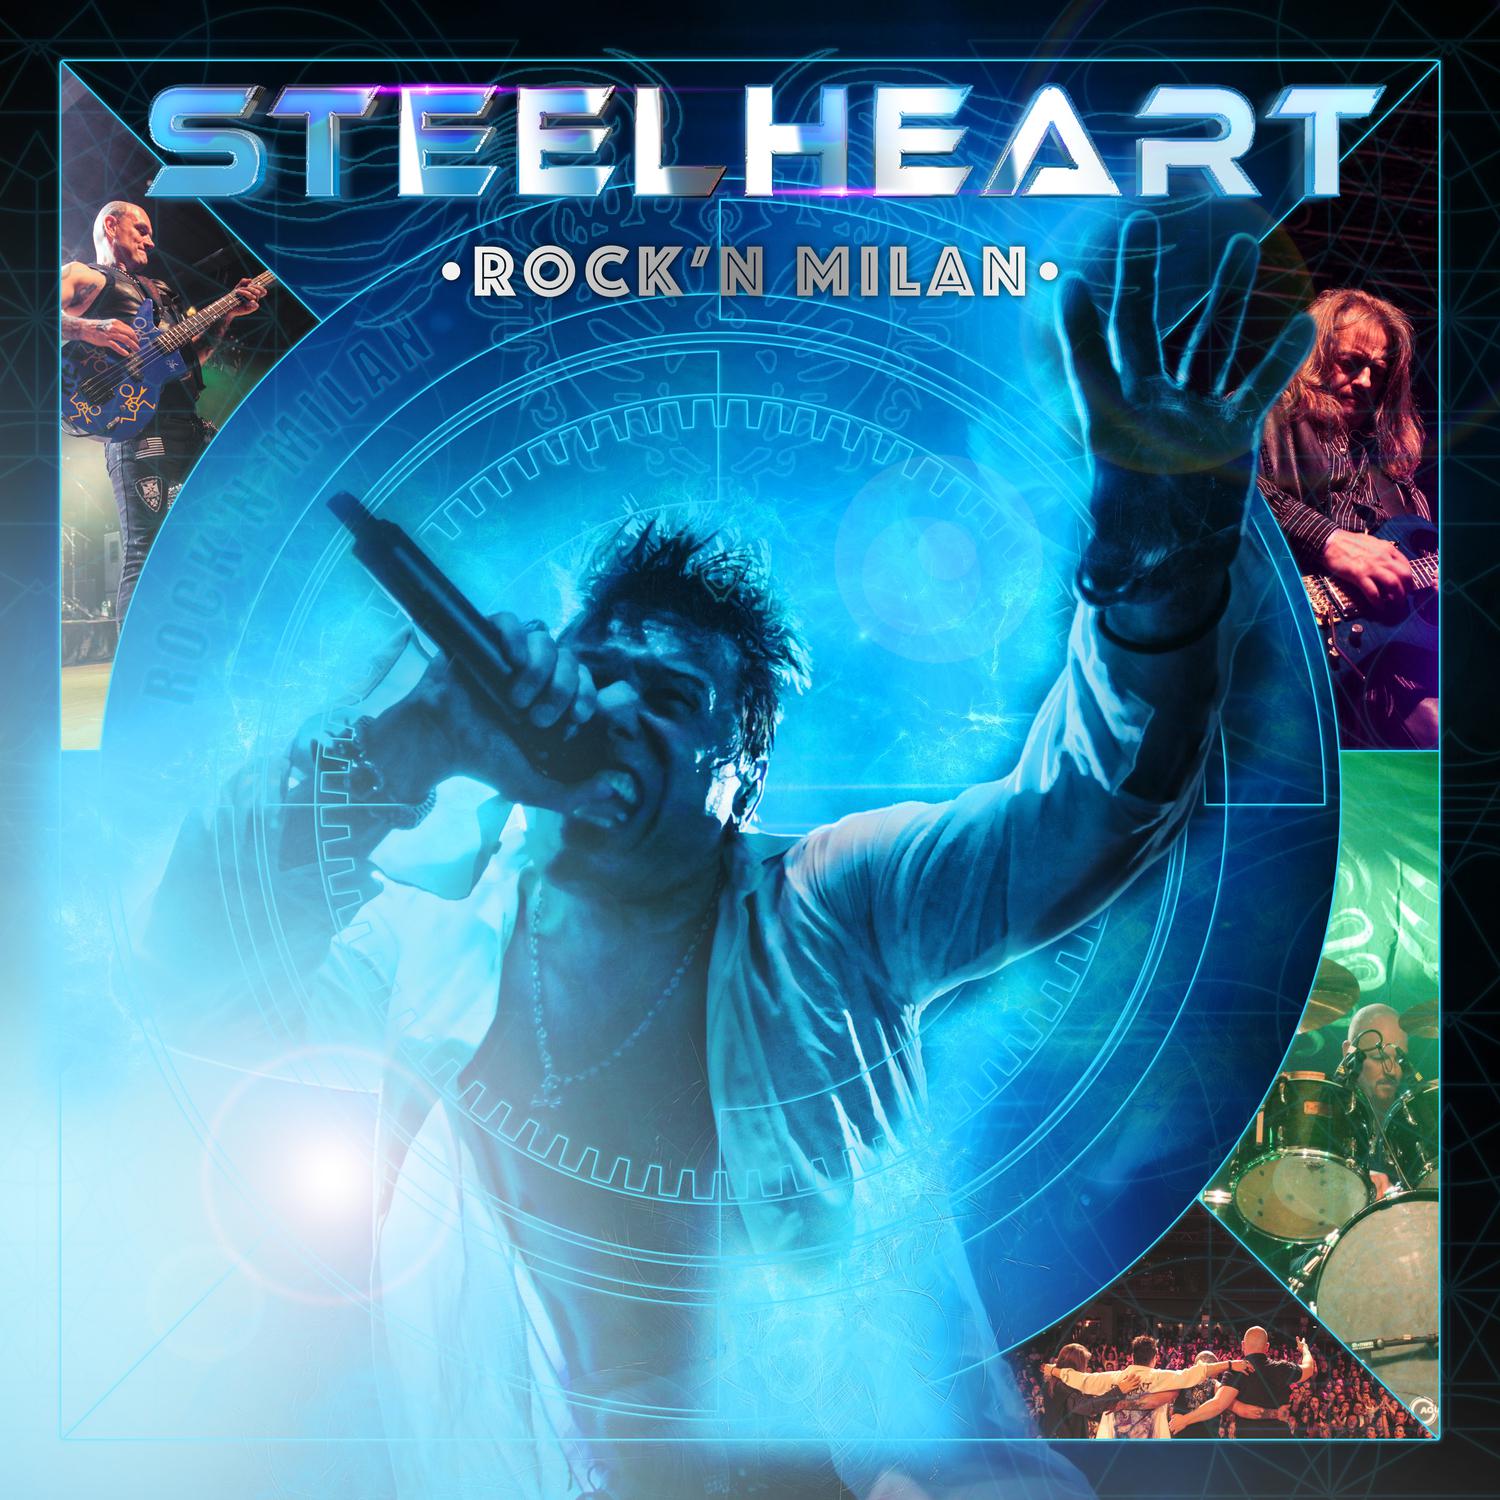 Steelheart - Livin' the Life (Live)